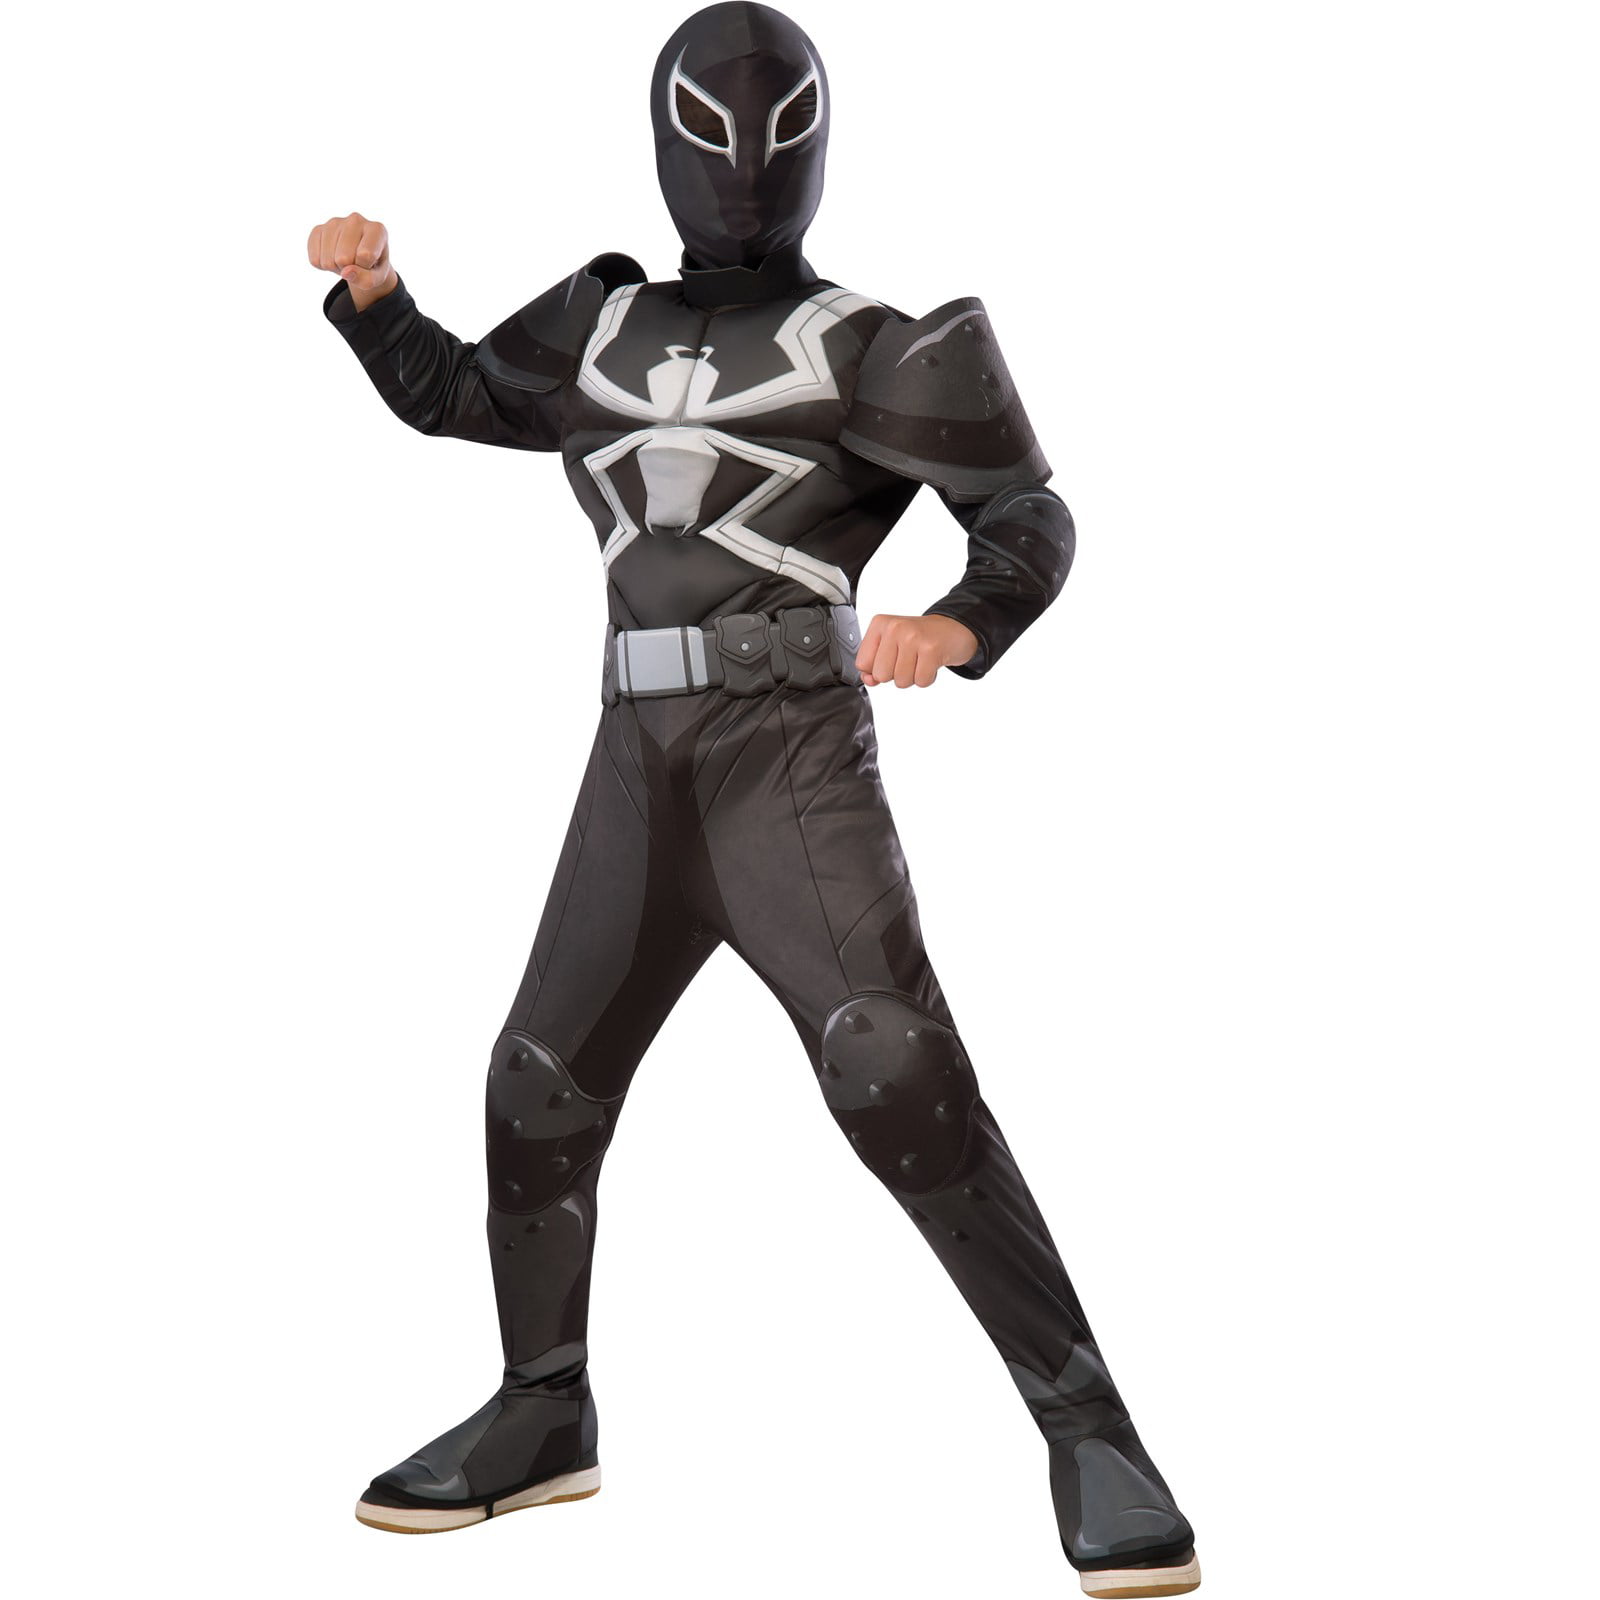 superhero black and white costume